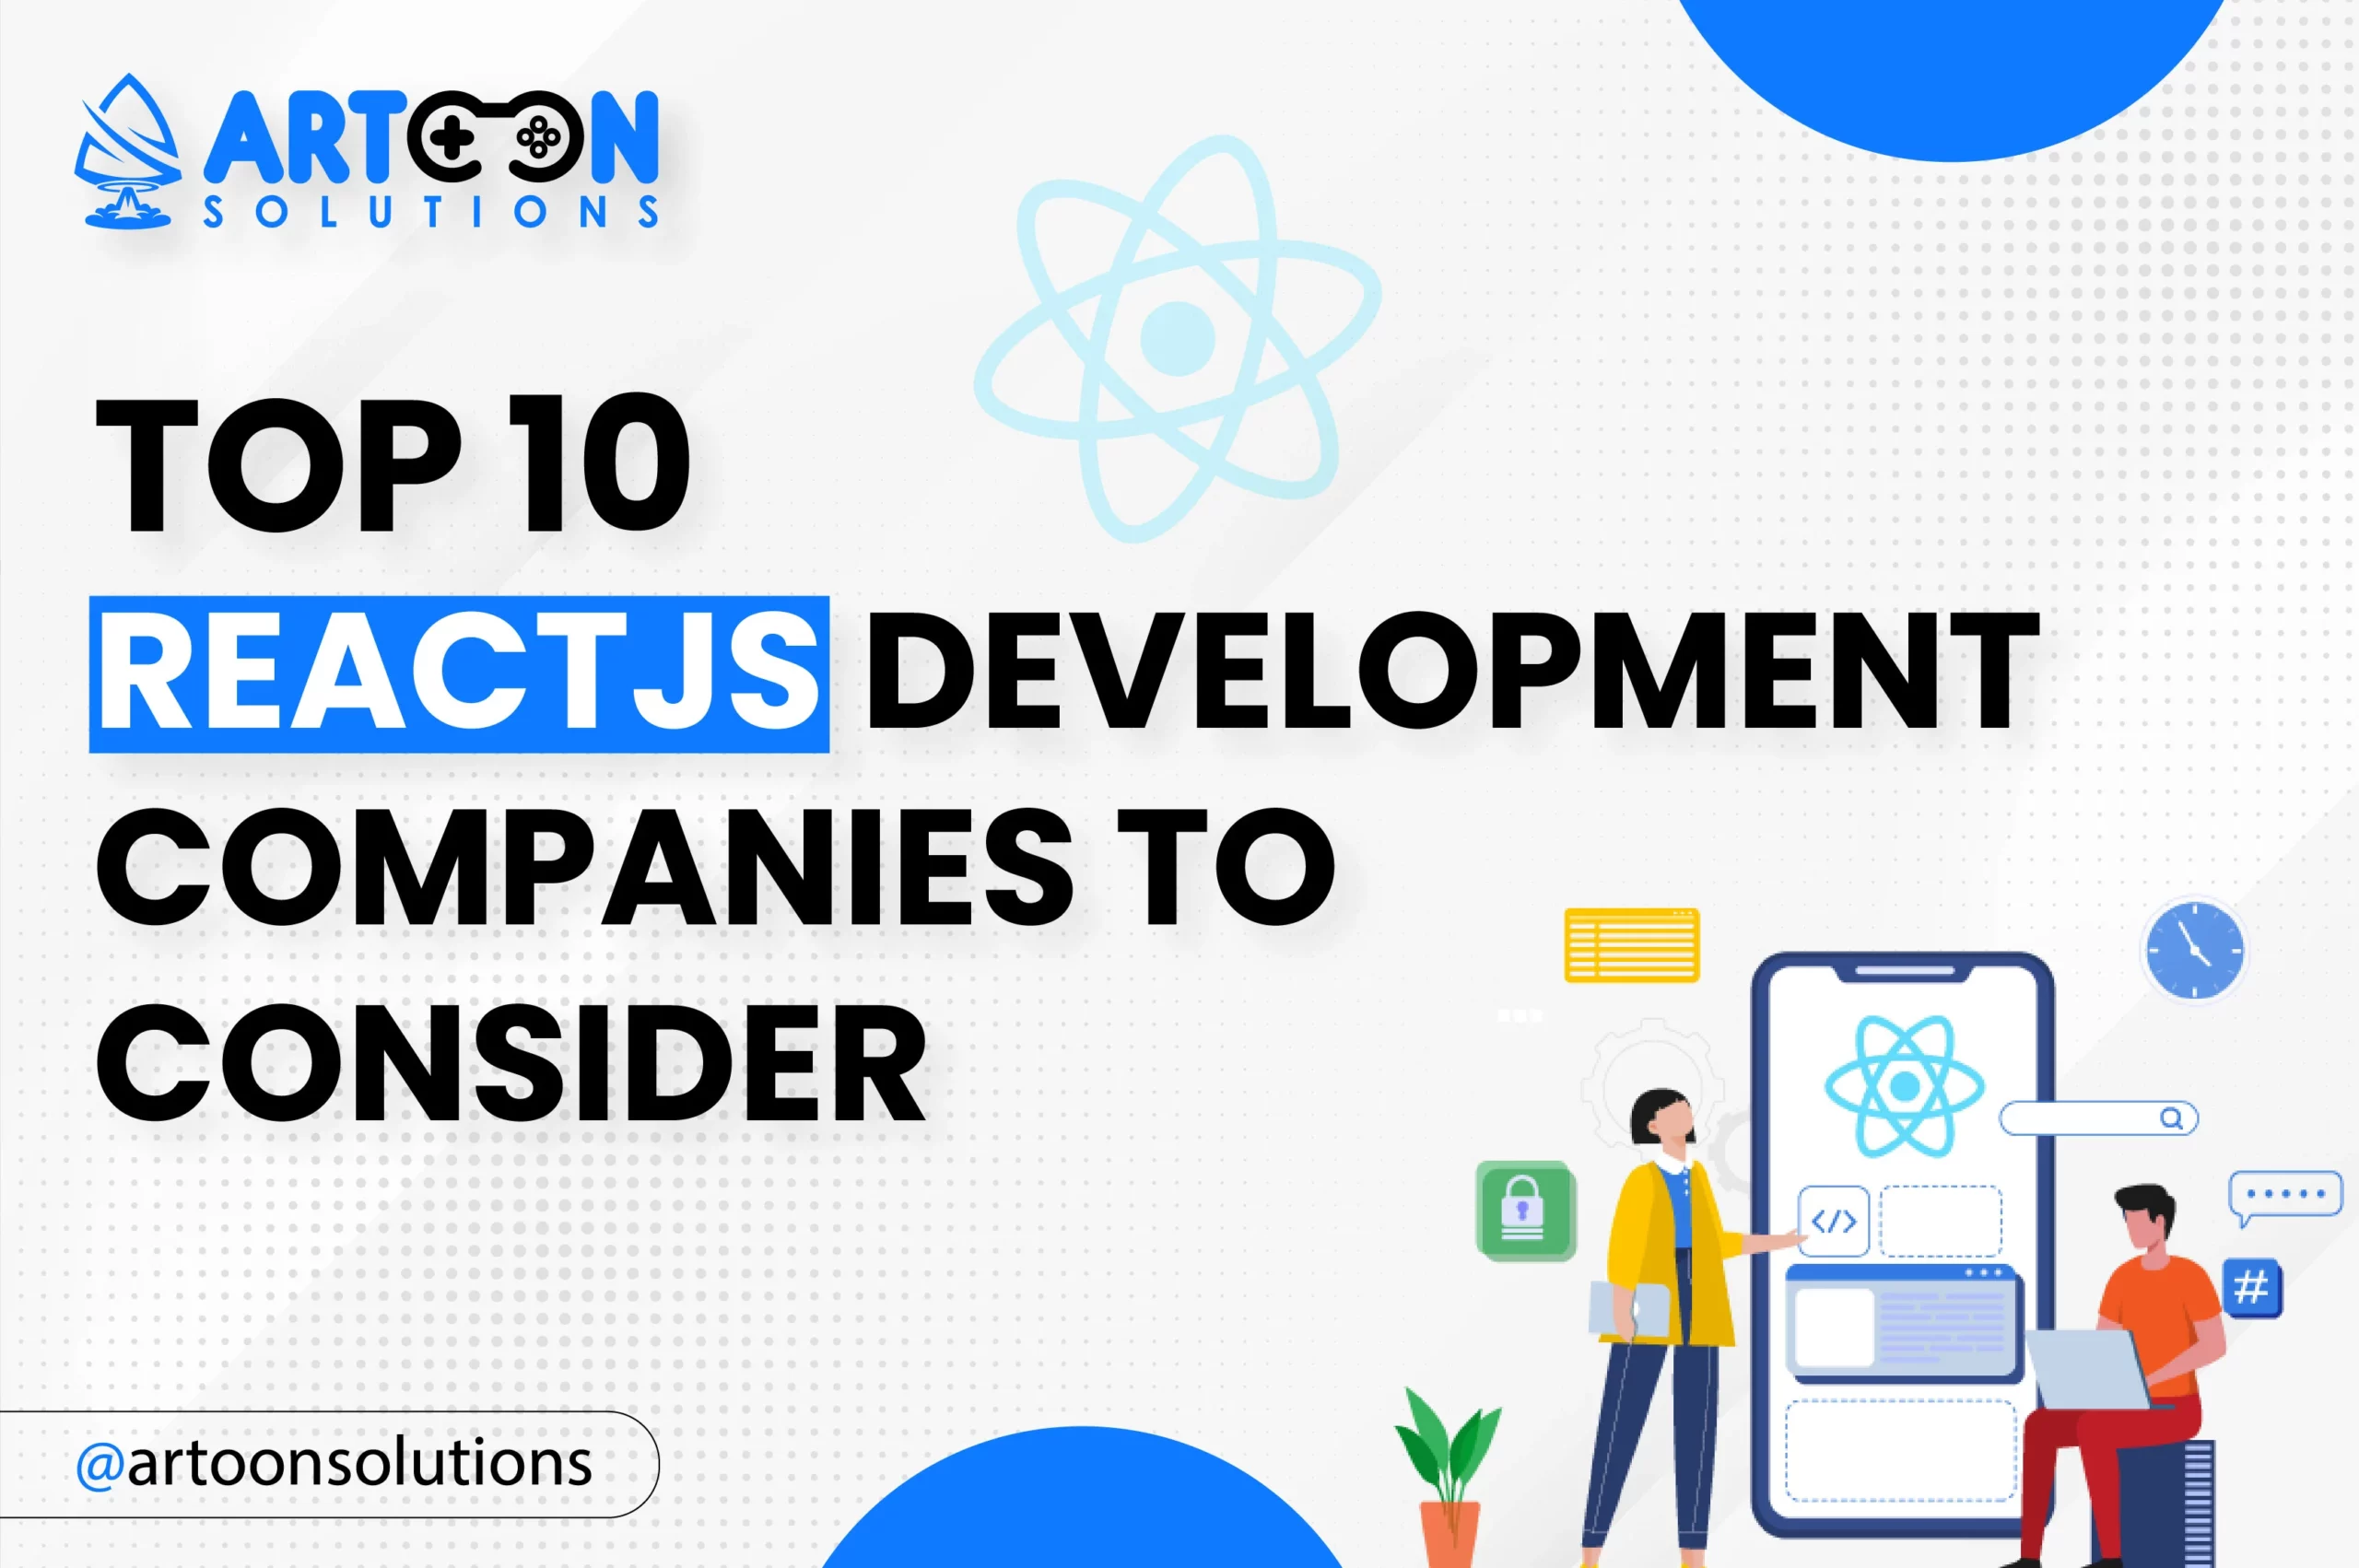 Top 10 React JS Development Companies To Consider